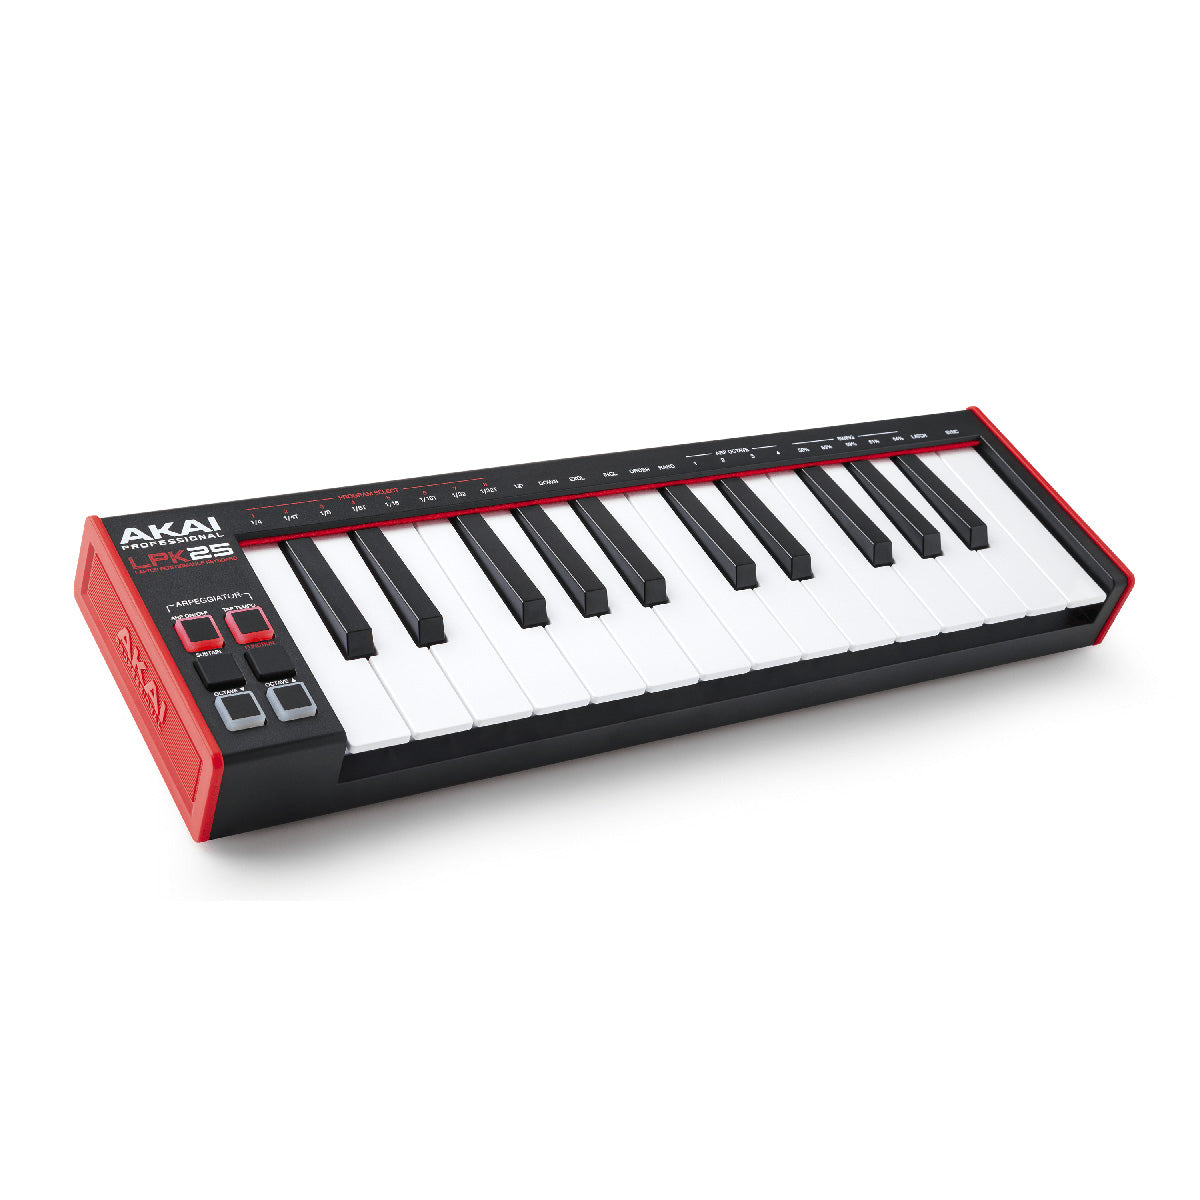 Akai LPK25 MK2 USB MIDI Keyboard Controller